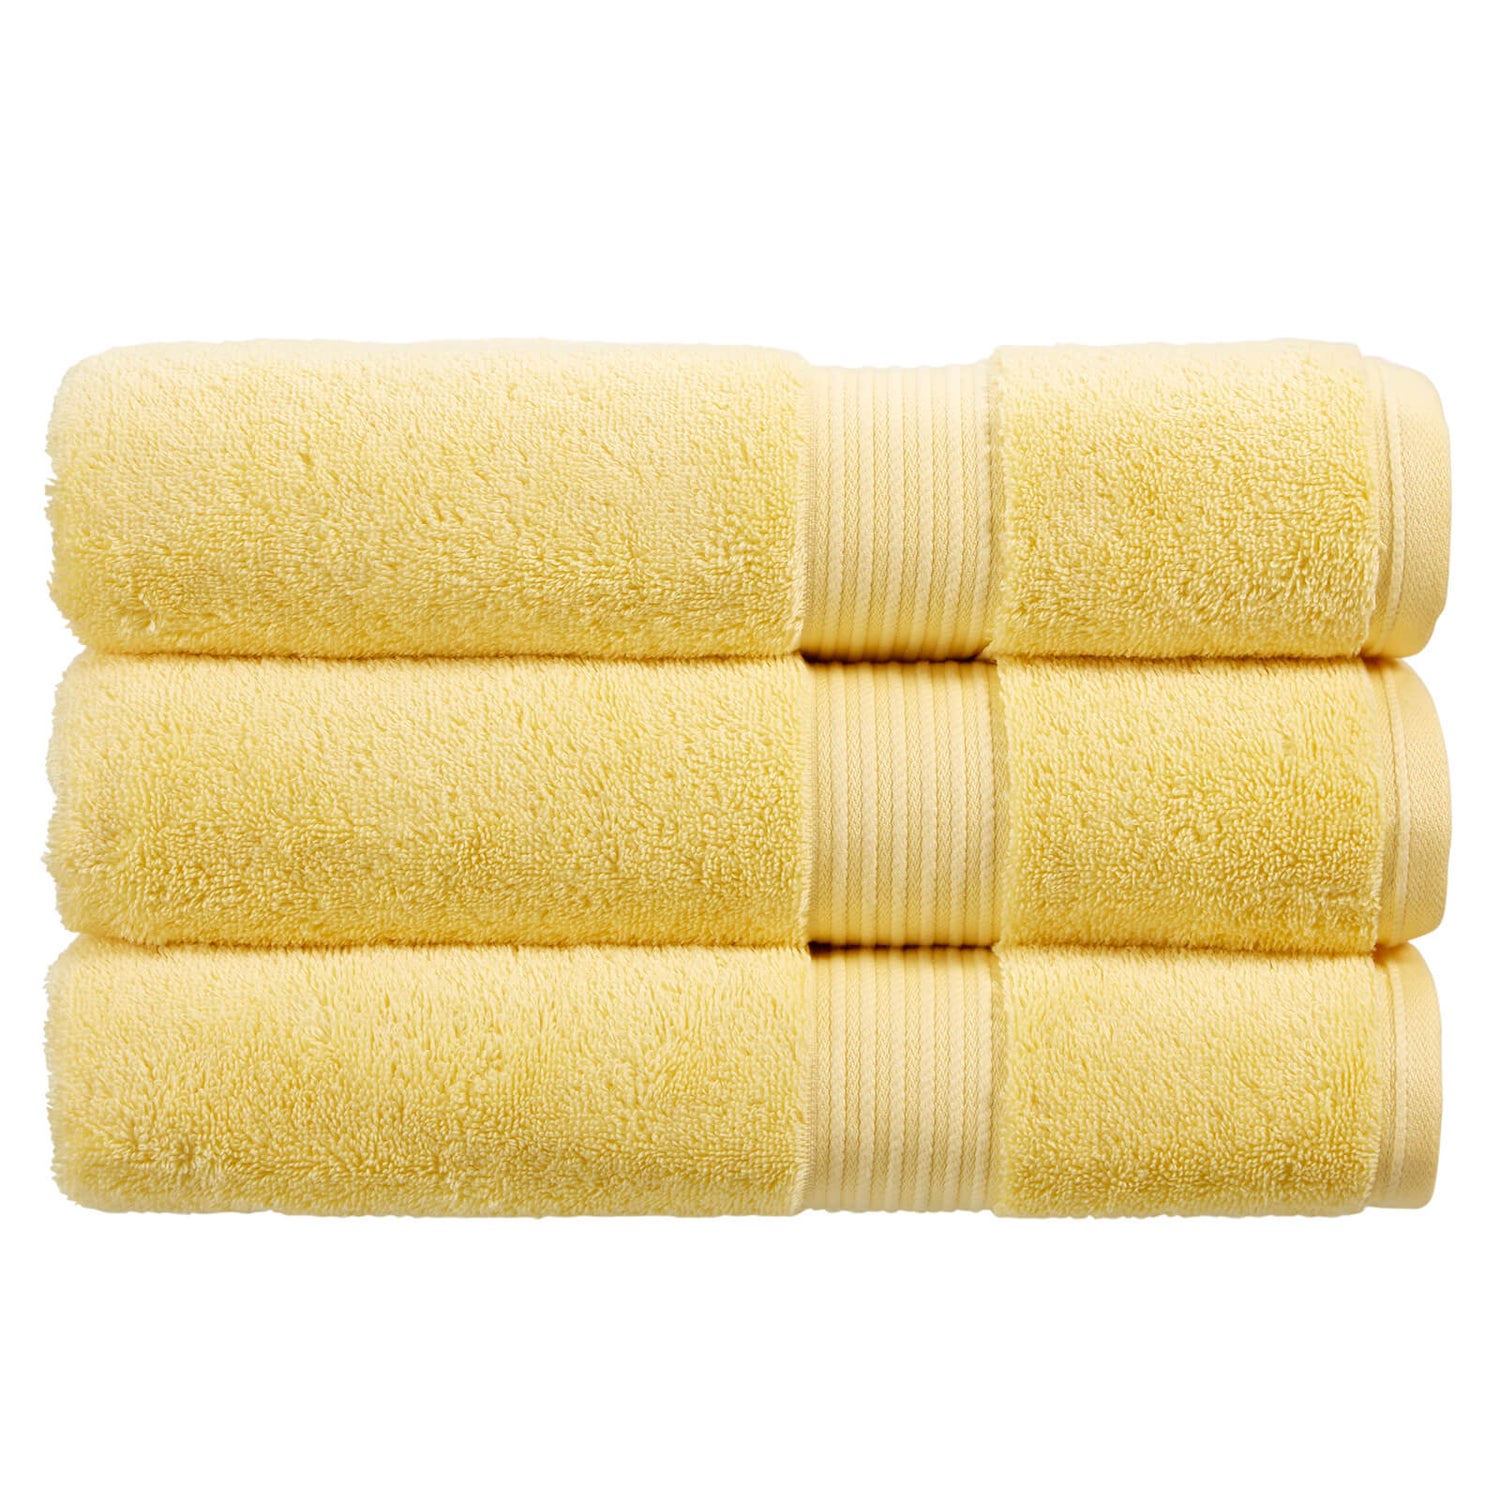 Christy Supreme Hygro Towels - Primrose - Hand Towel (Set of 2)